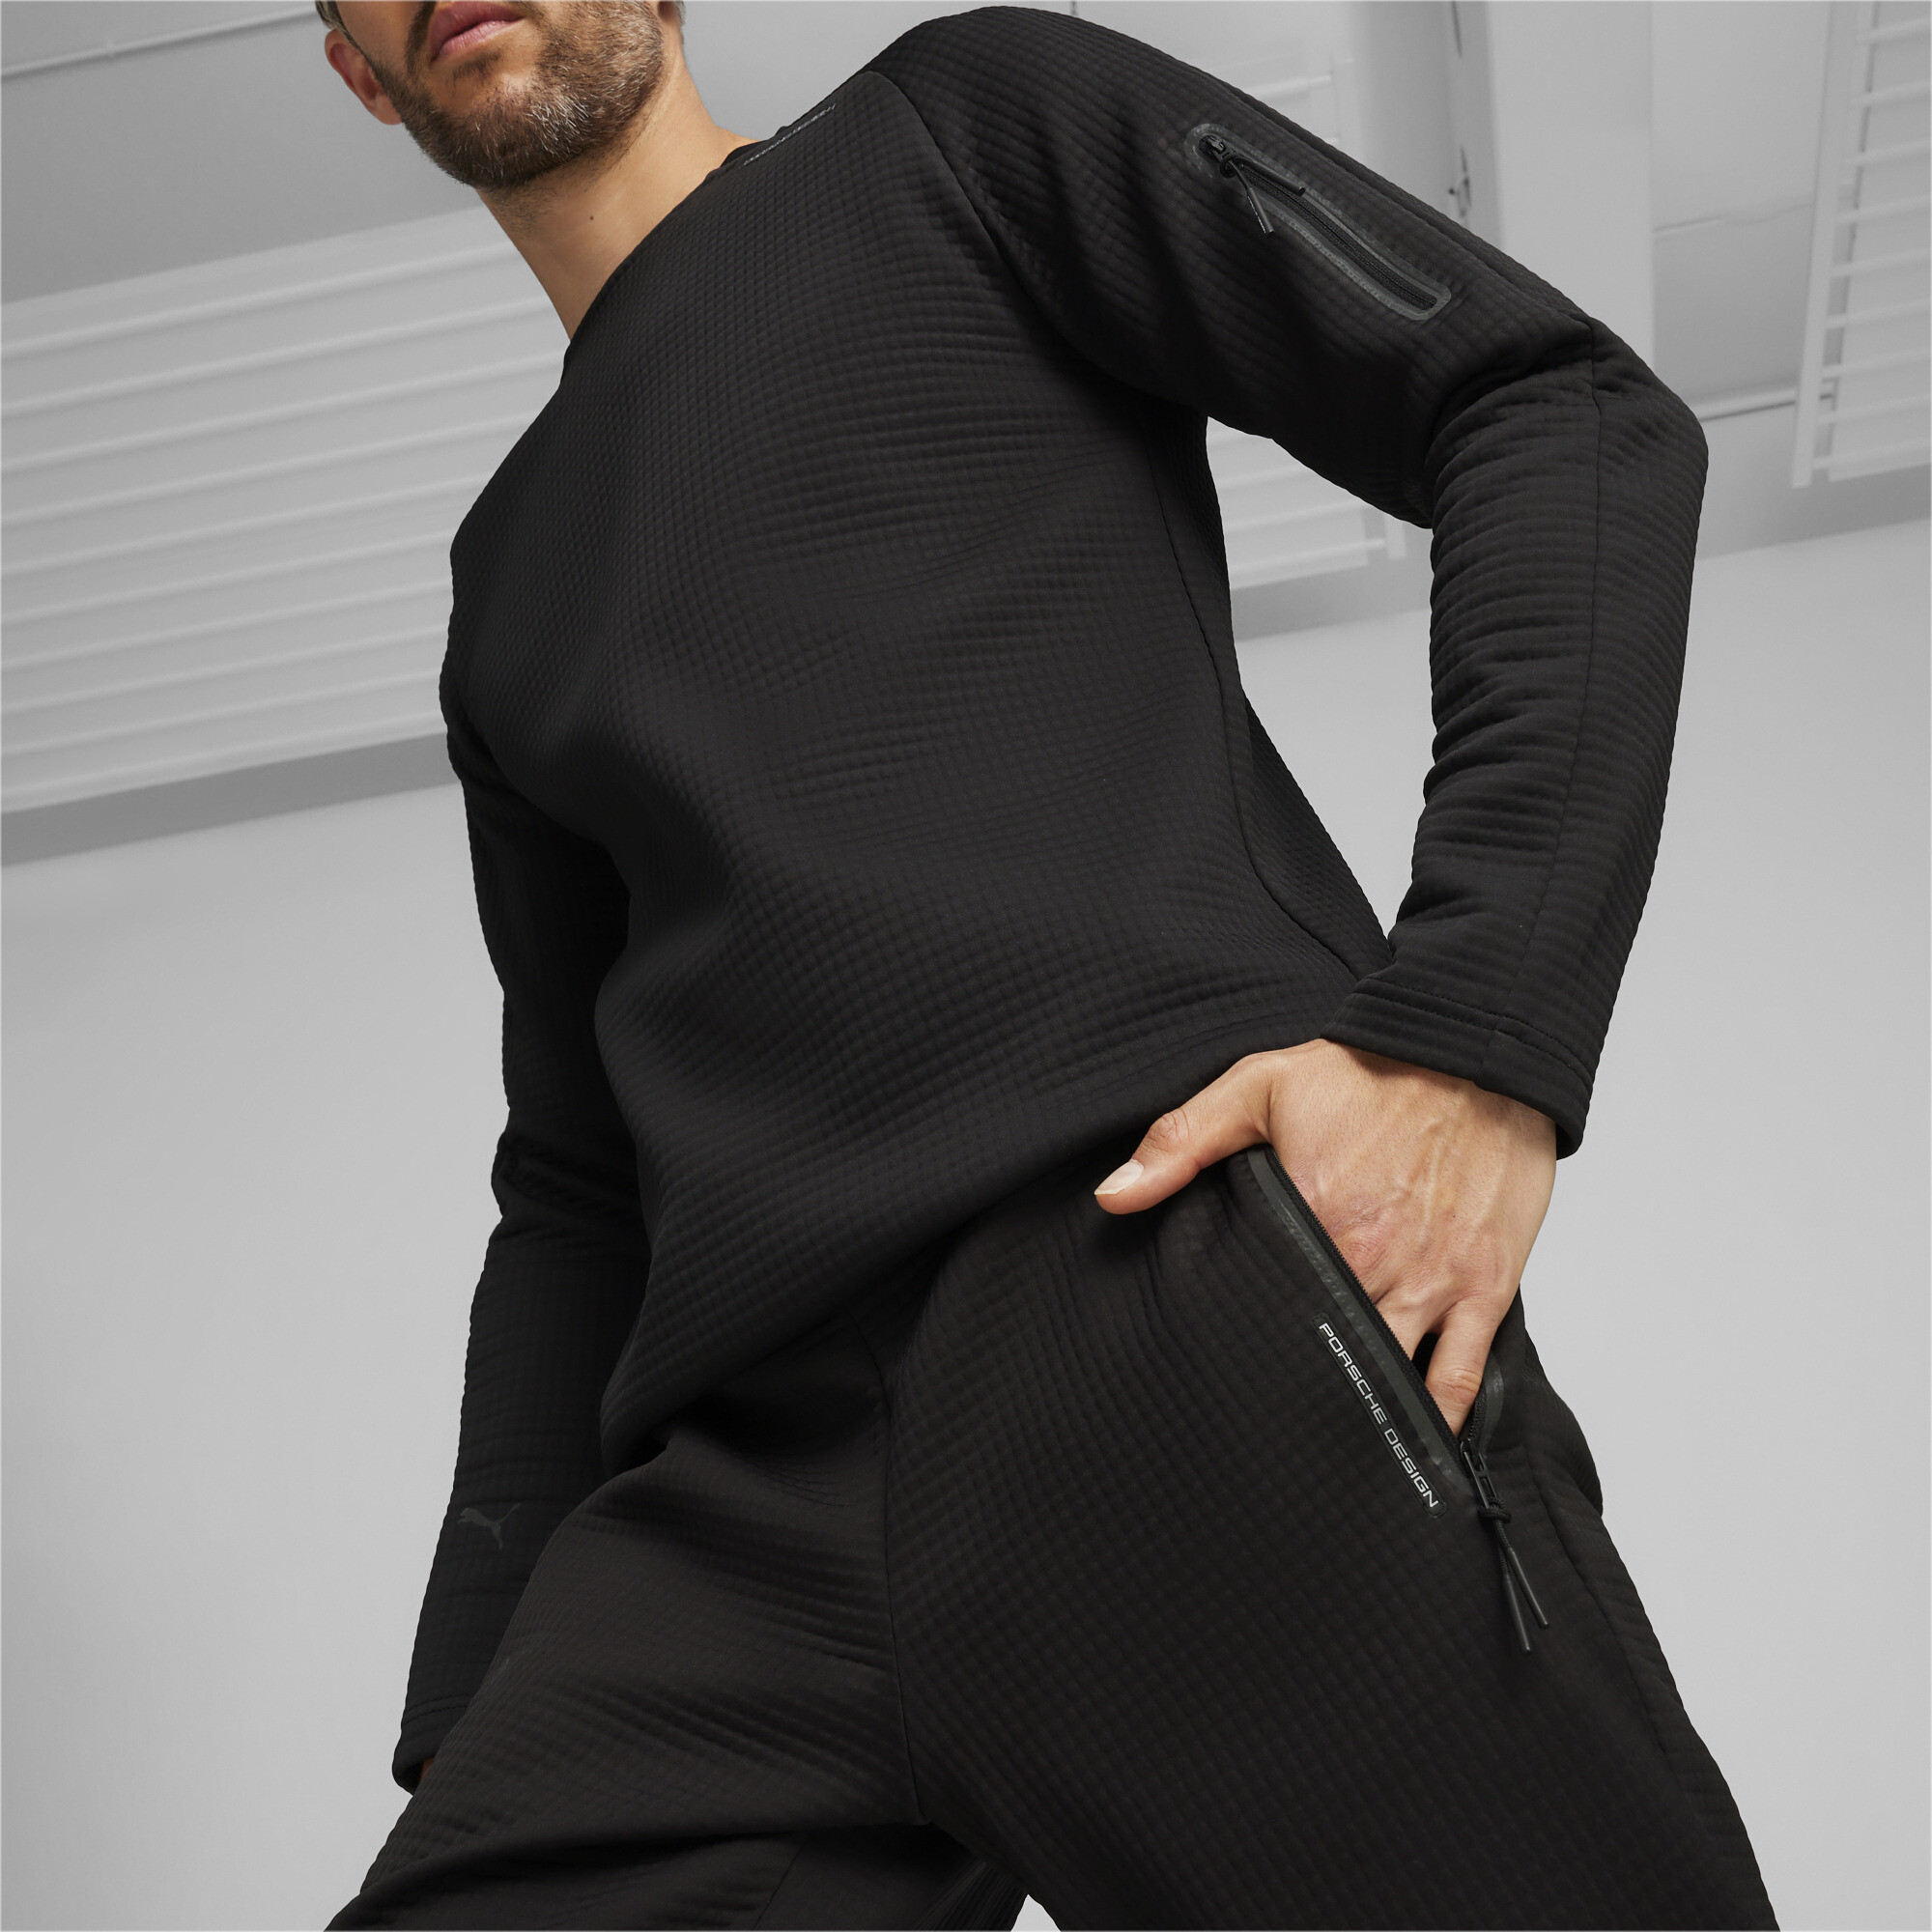 Men's PUMA Porsche Design Sweatpants In 10 - Black, Size XL